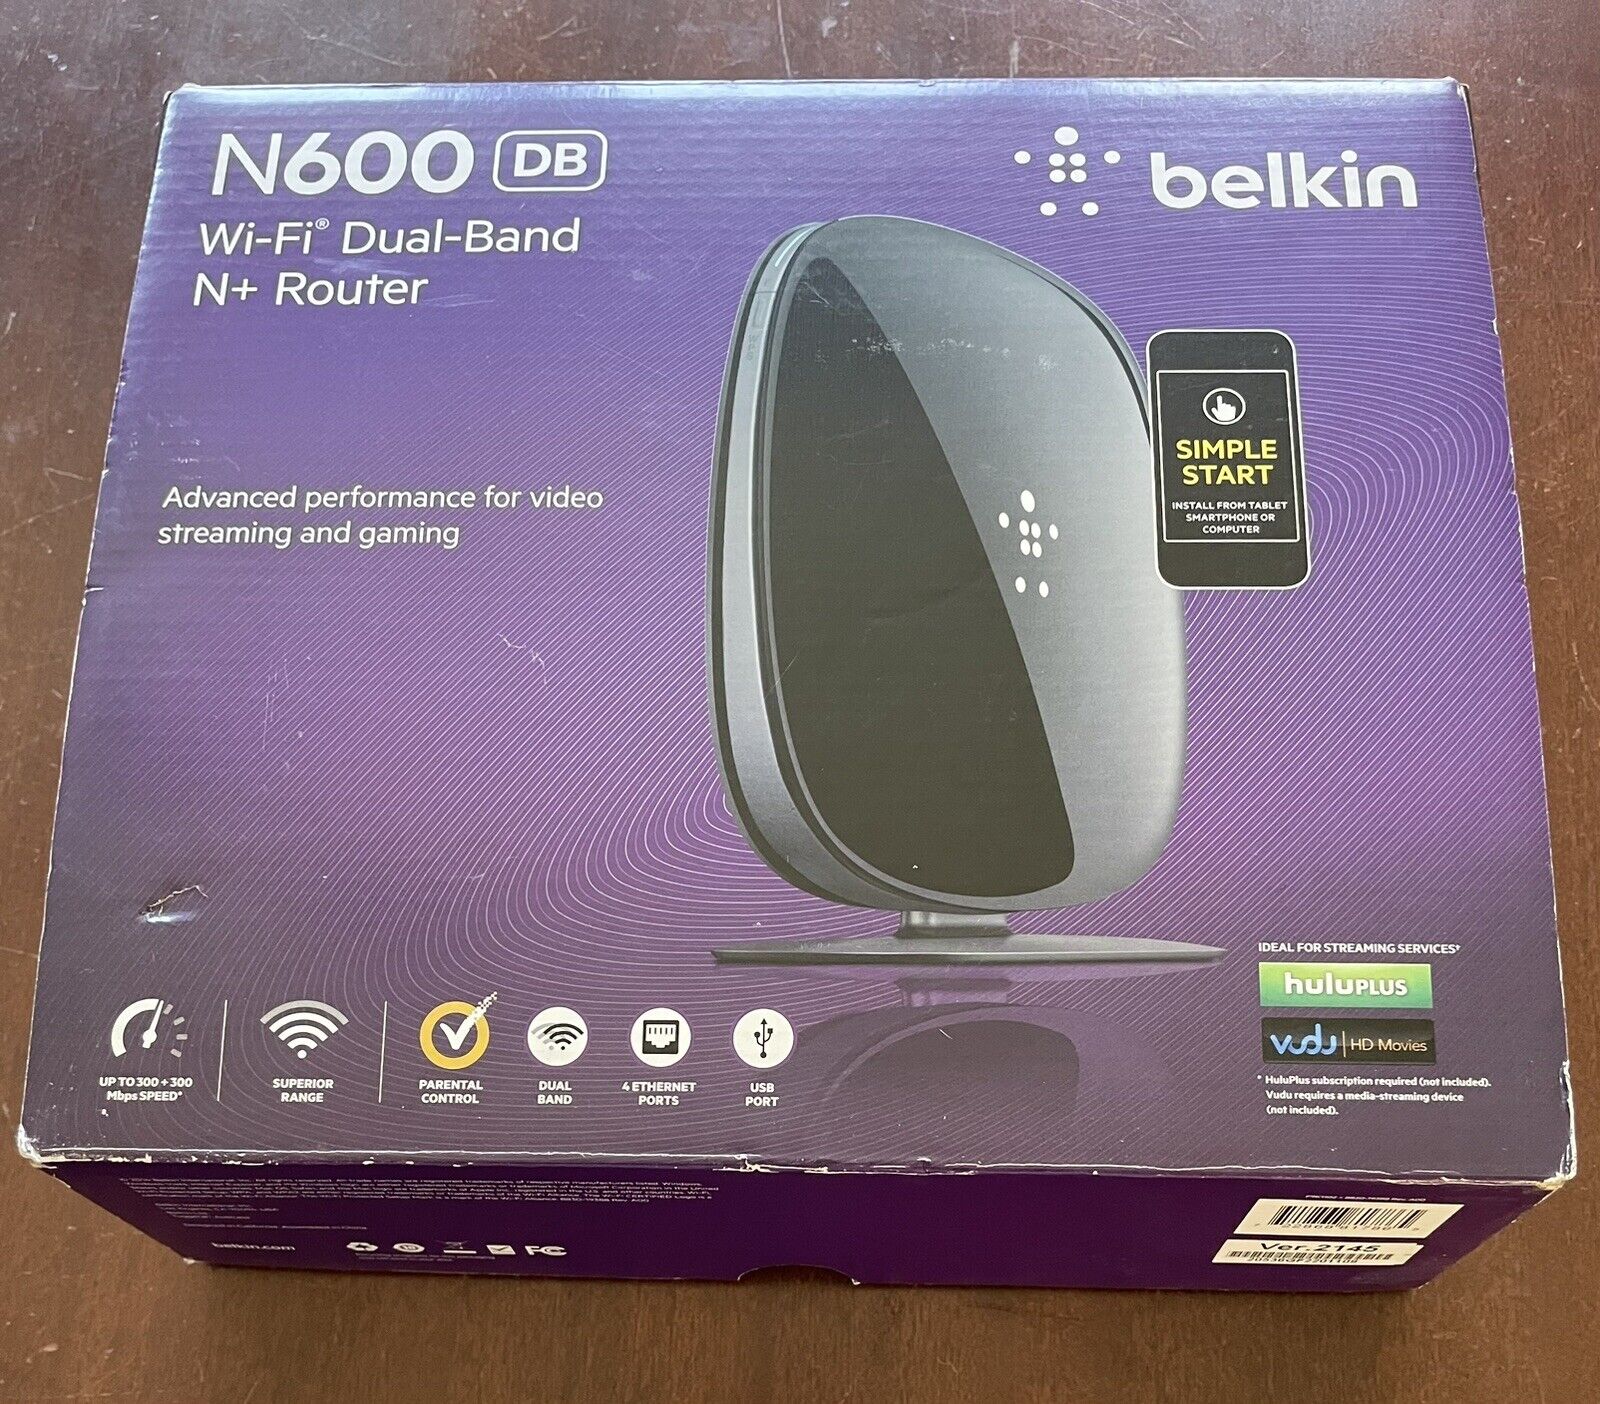 Belkin N600 DB Wi-Fi Dual Band N+ Wireless Router